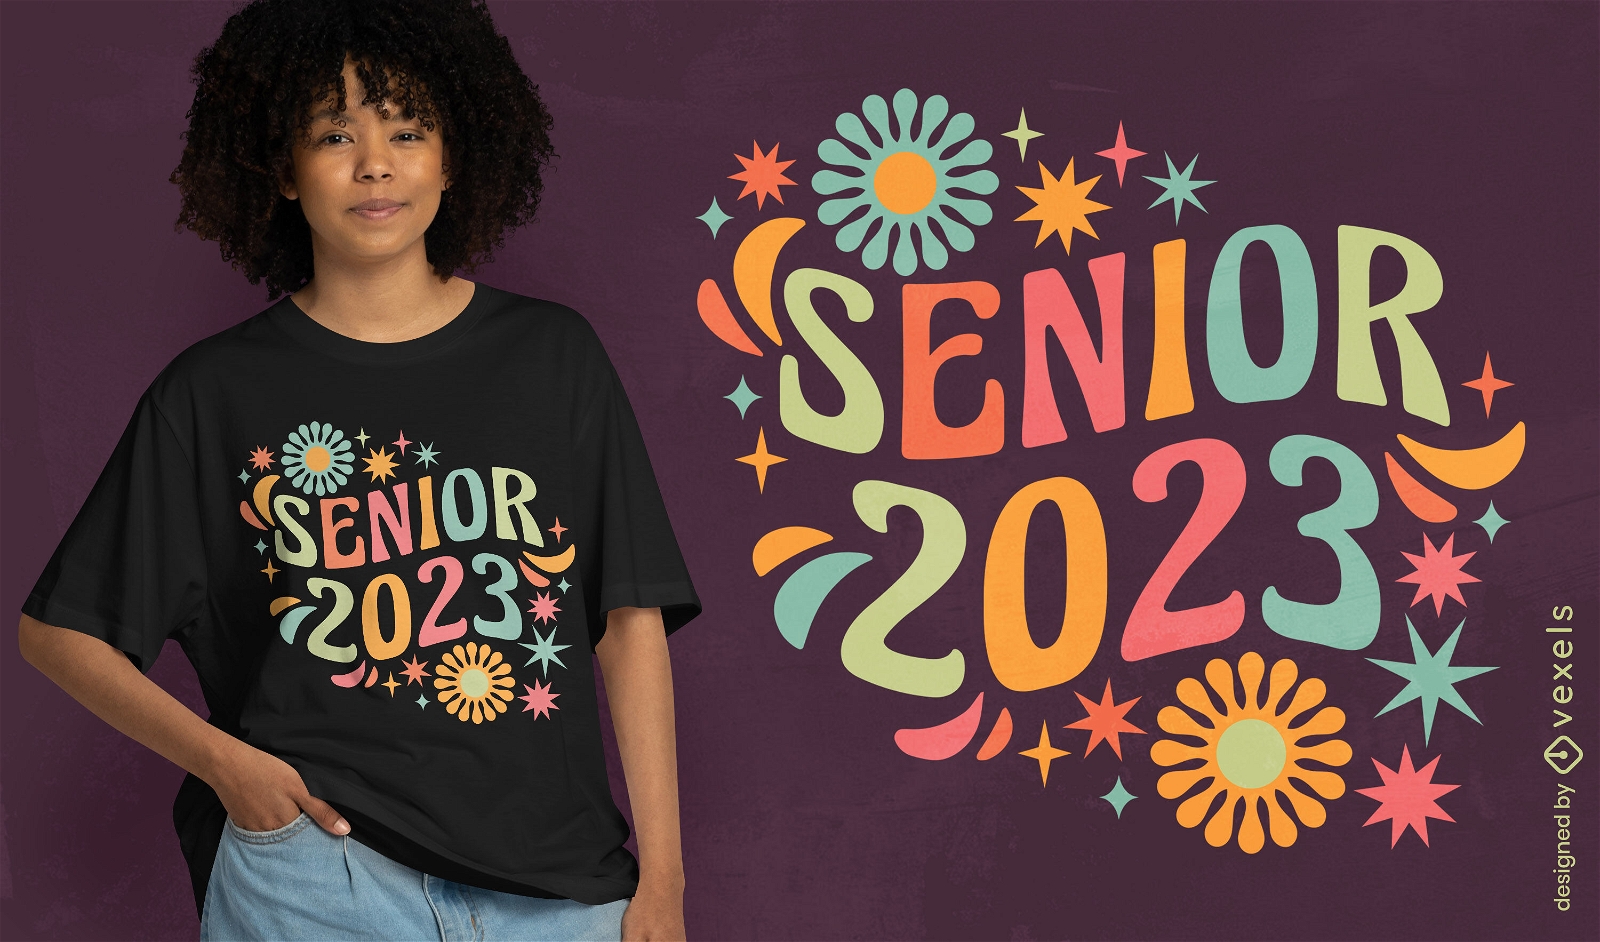 Senior 2023 colorful t-shirt design